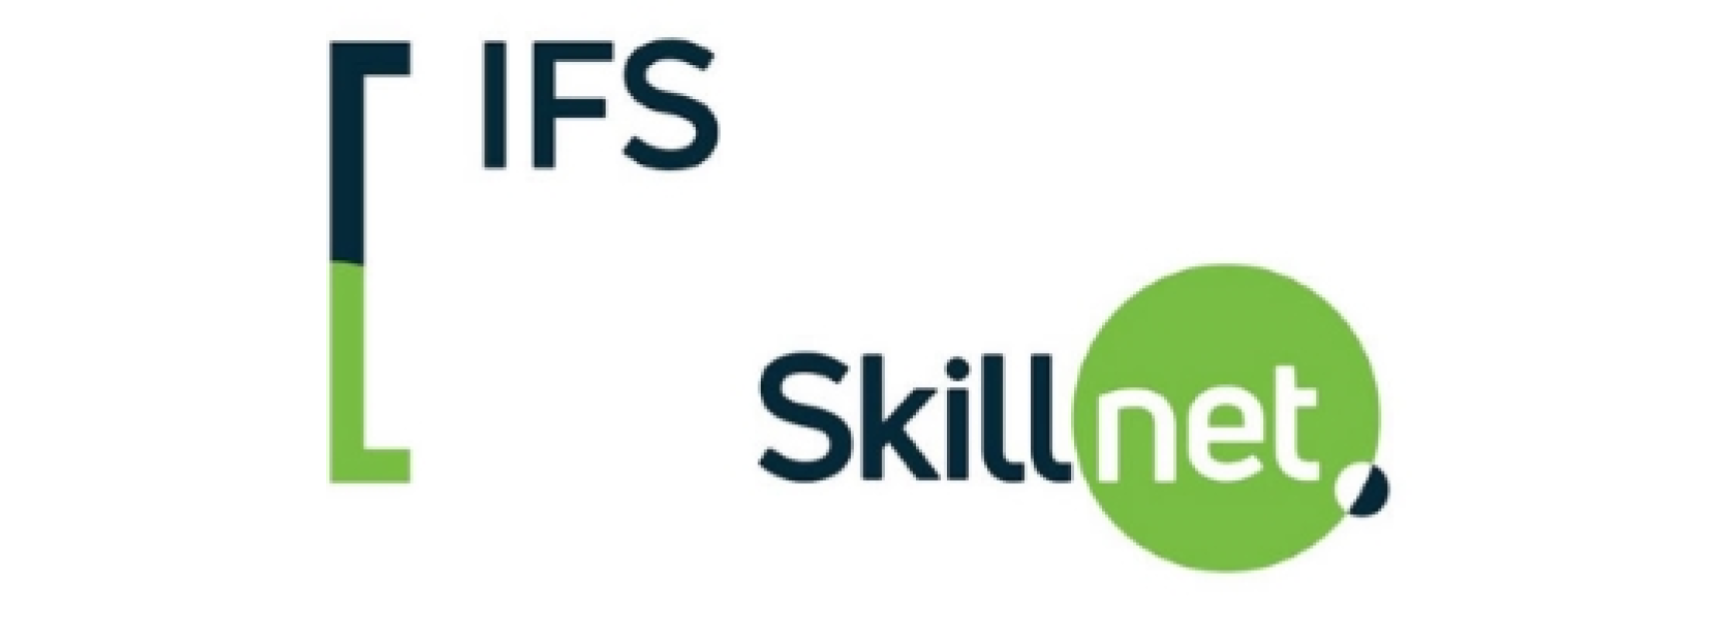 IFS Skillnet logo